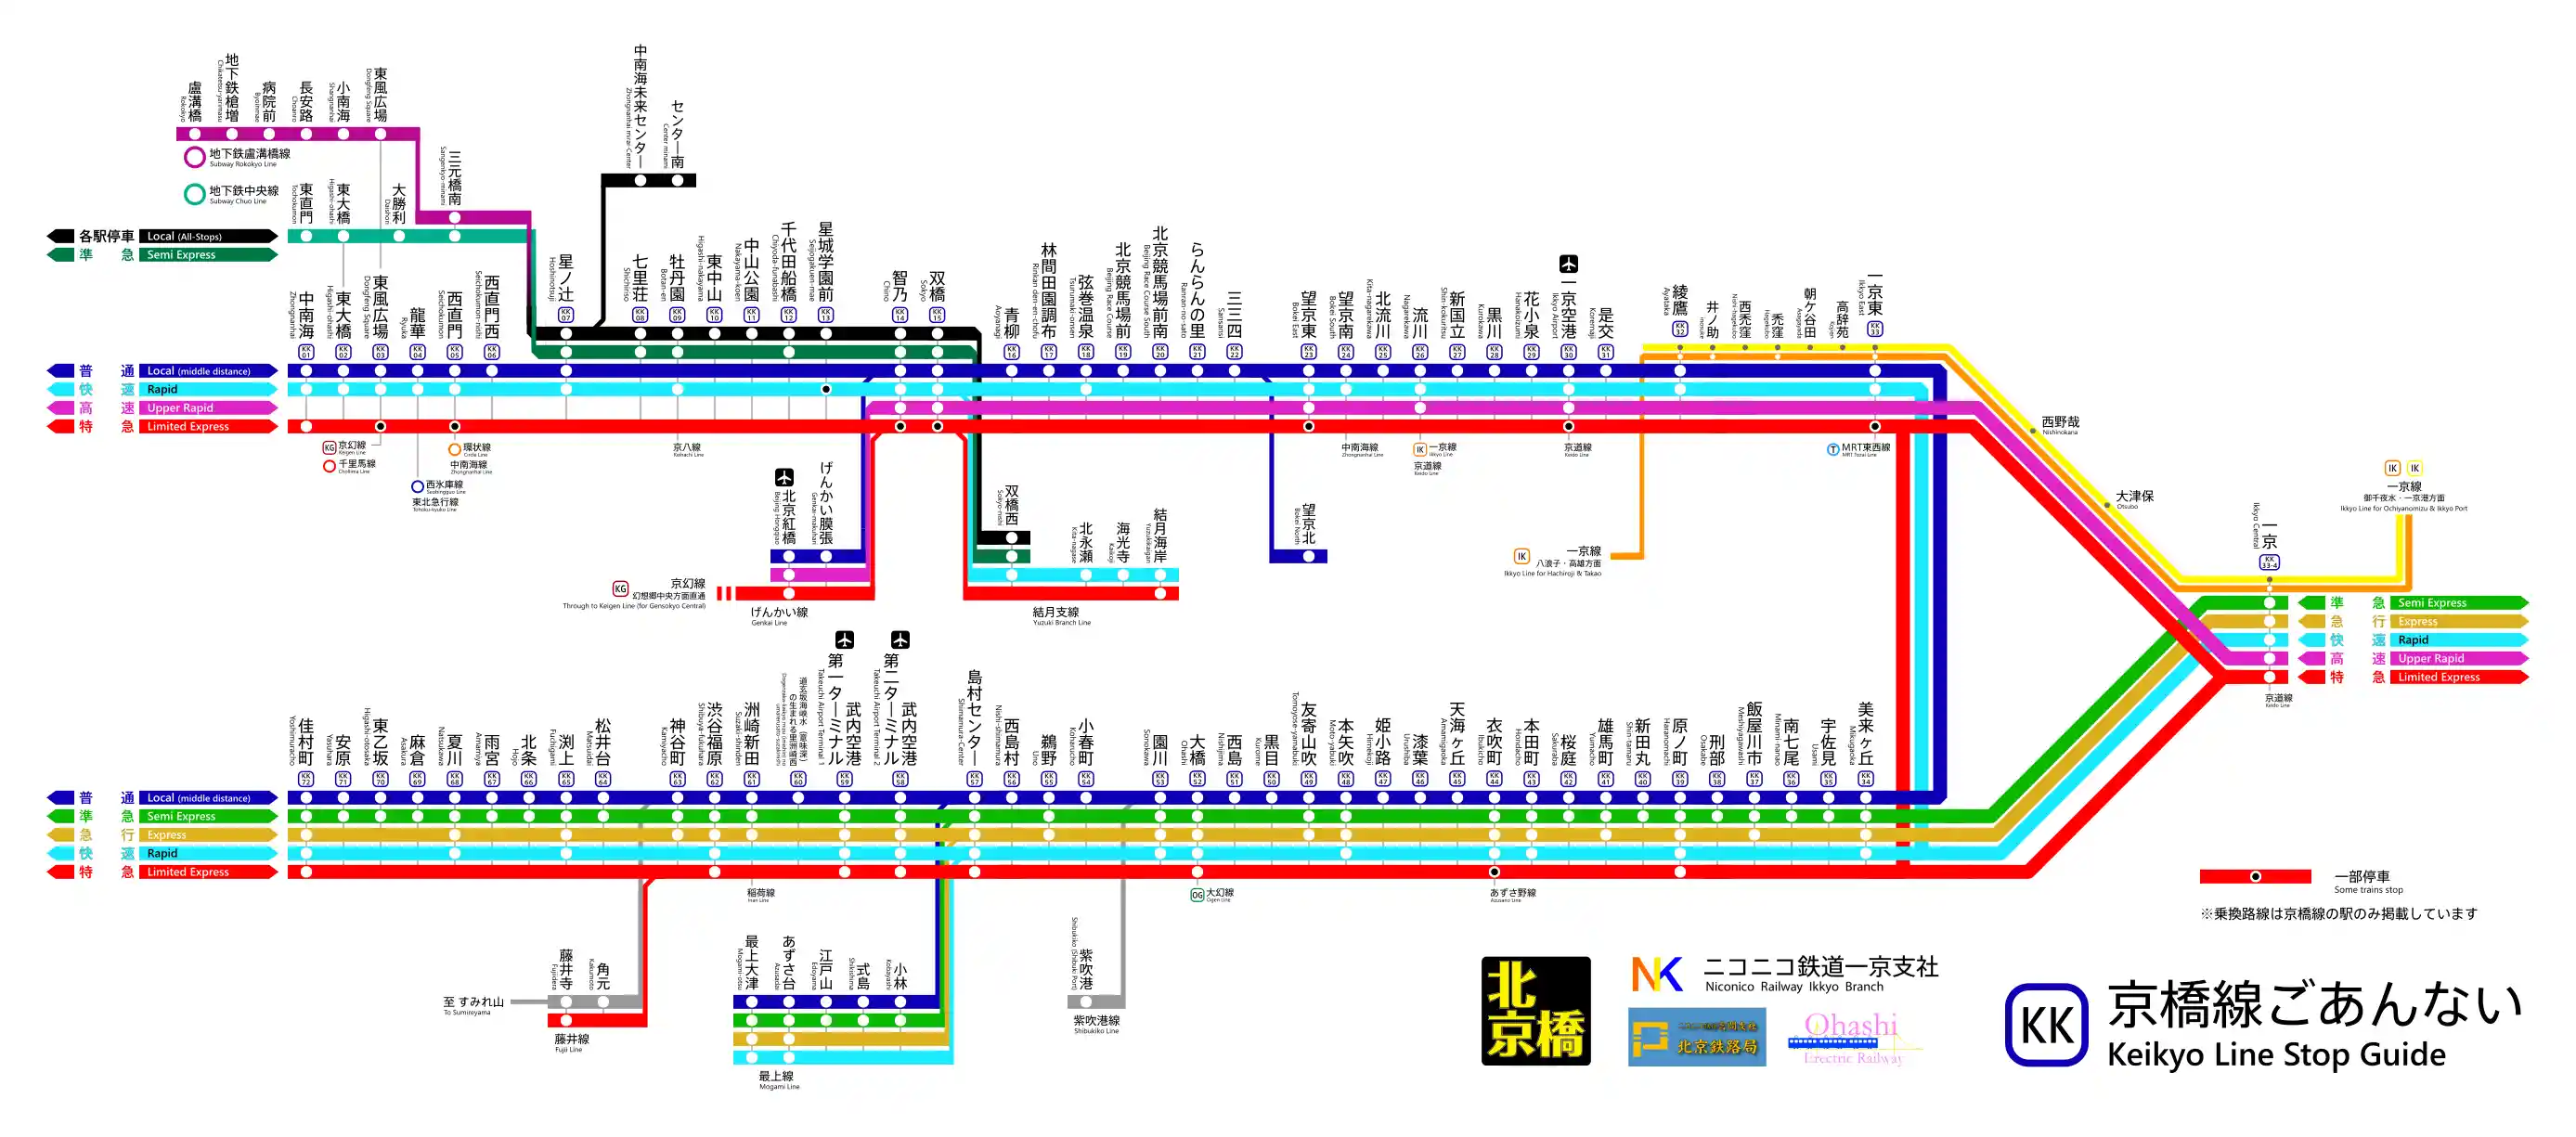 京橋線路線図201808wiki.png